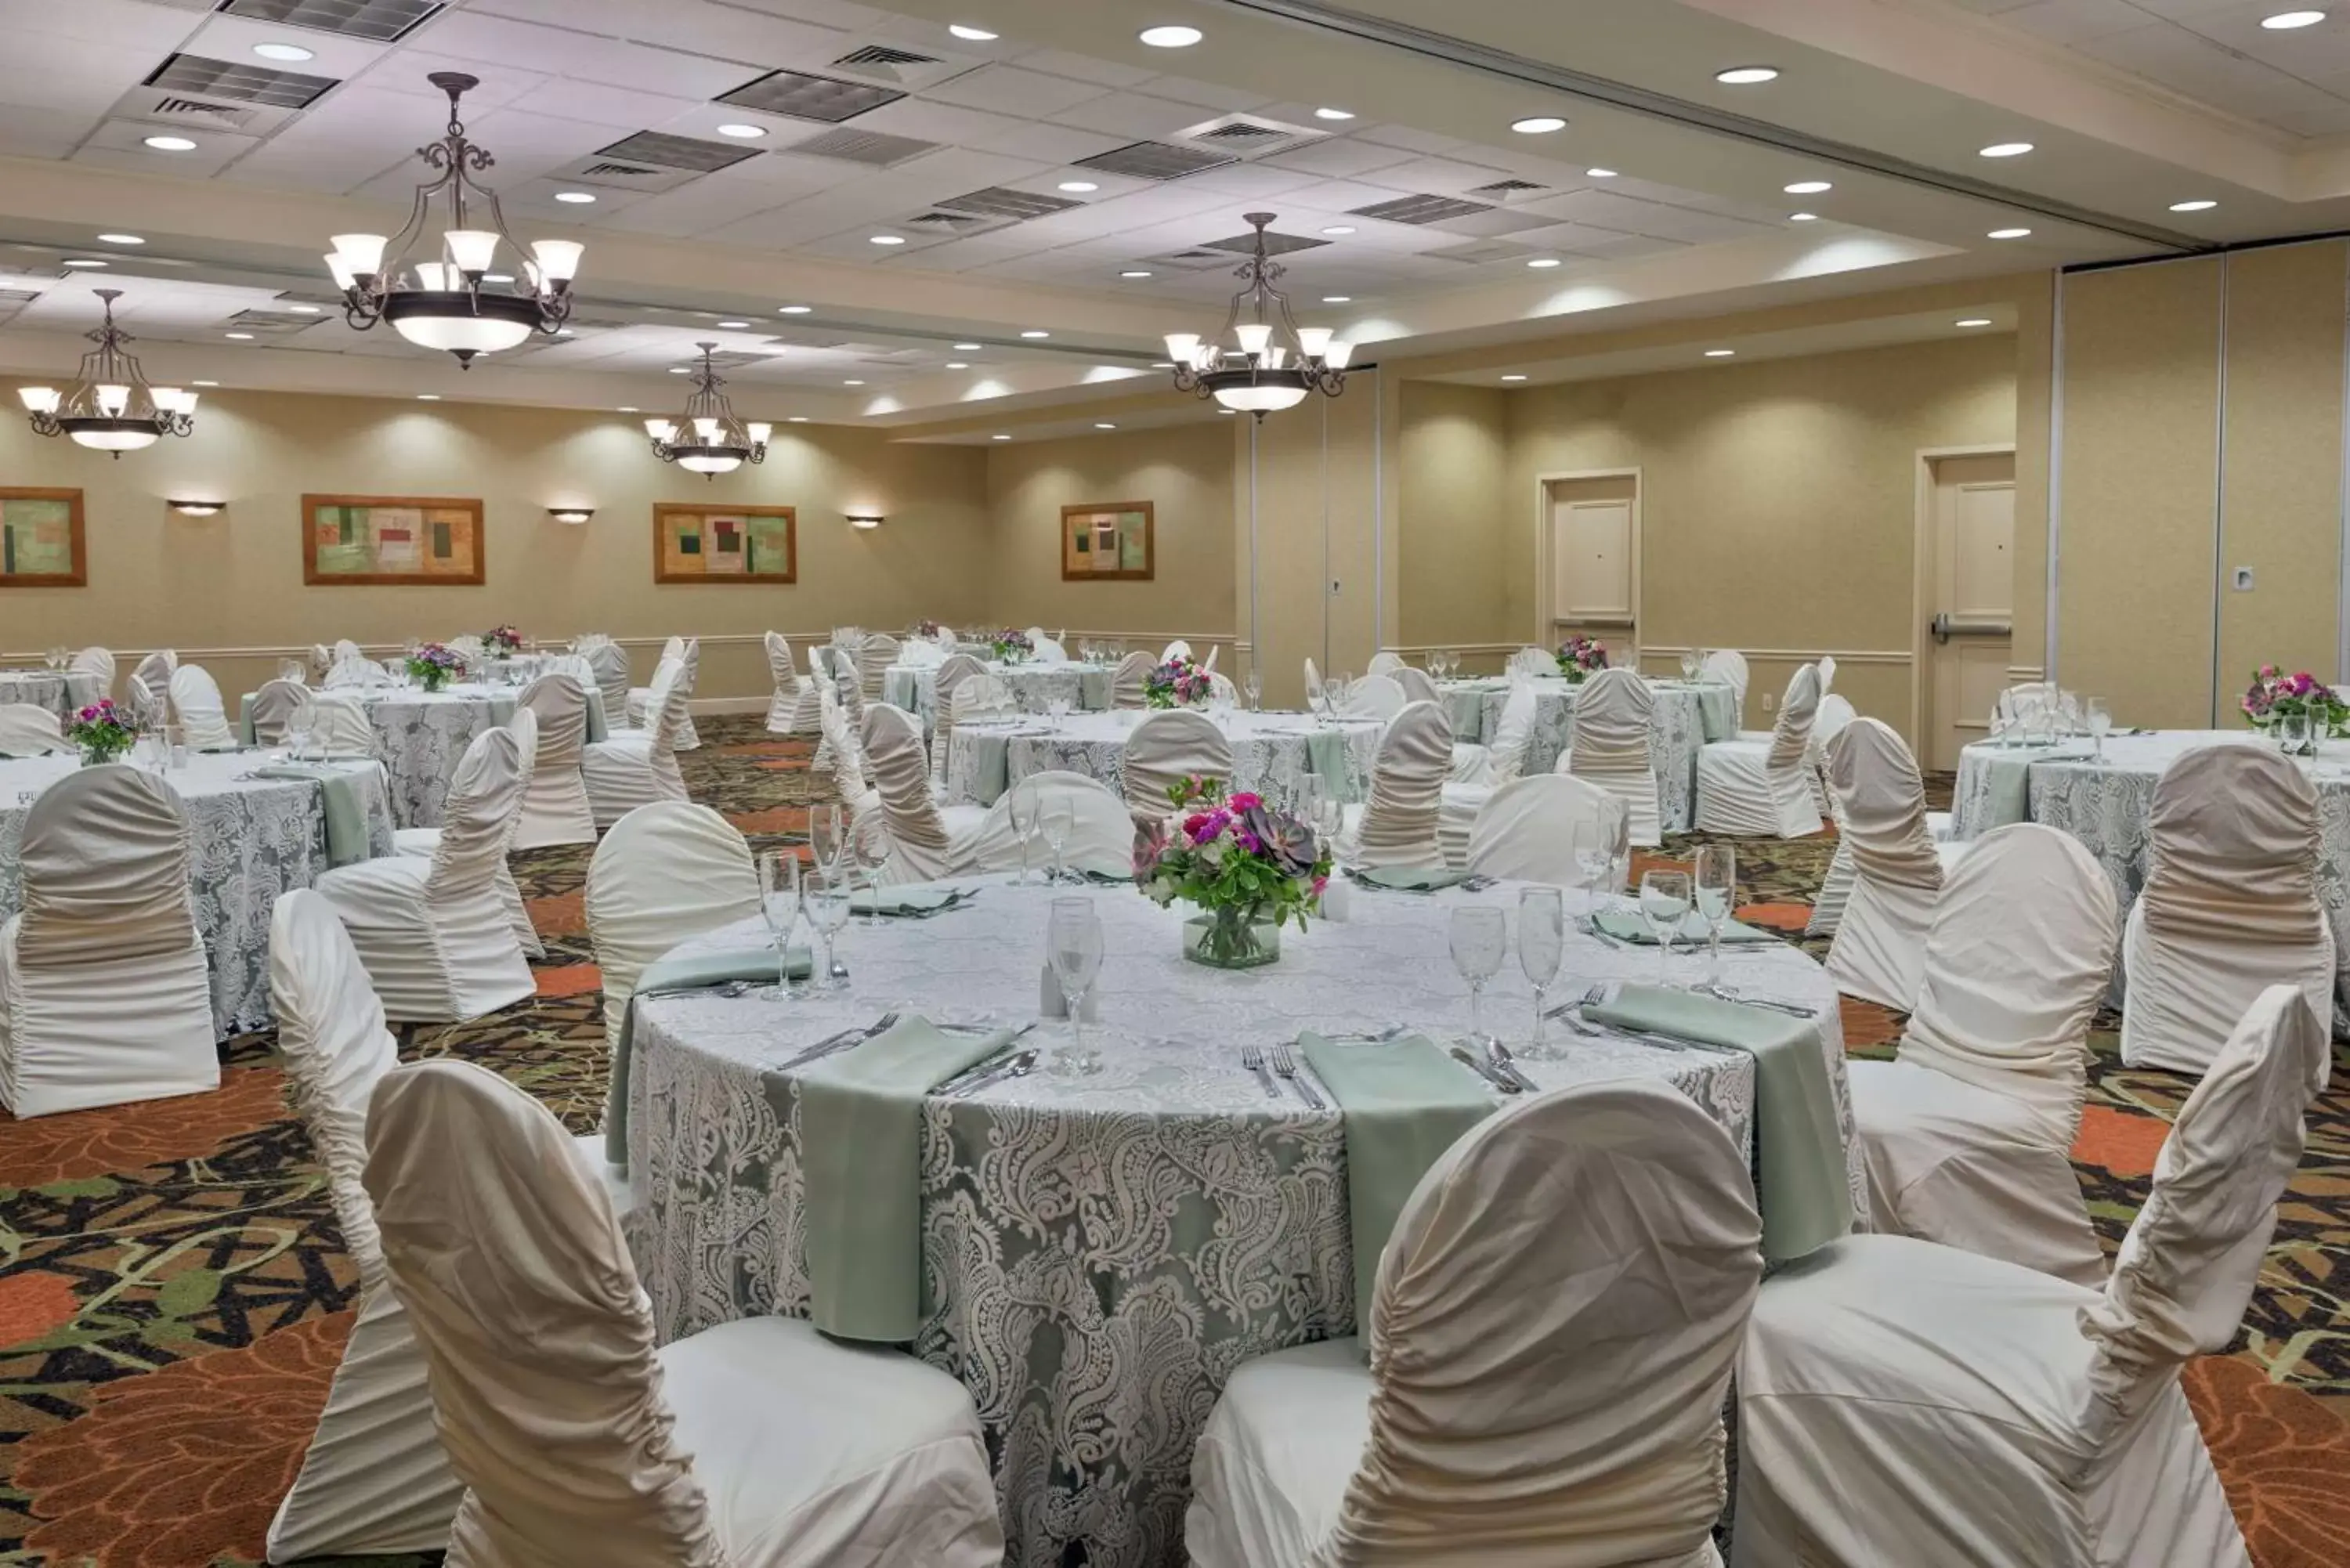 Meeting/conference room, Banquet Facilities in Hilton Garden Inn Buffalo Airport